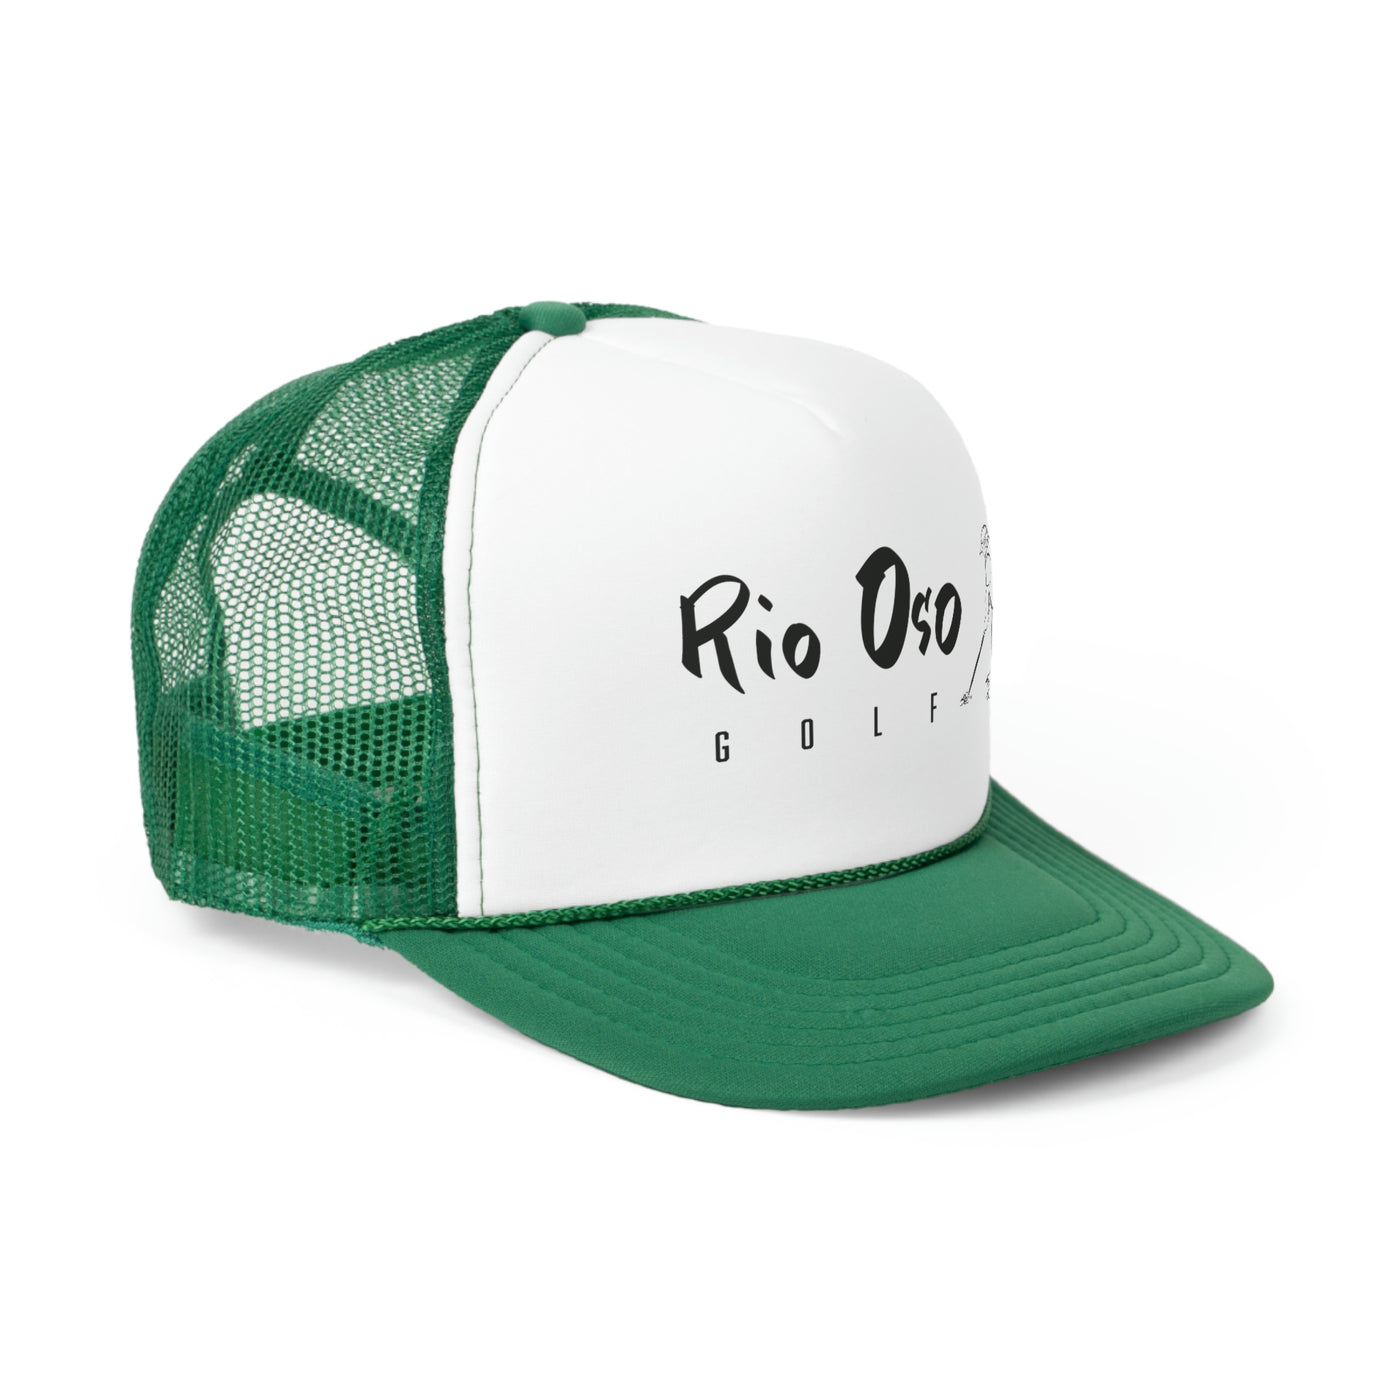 Rio Oso Golf Trucker Hat